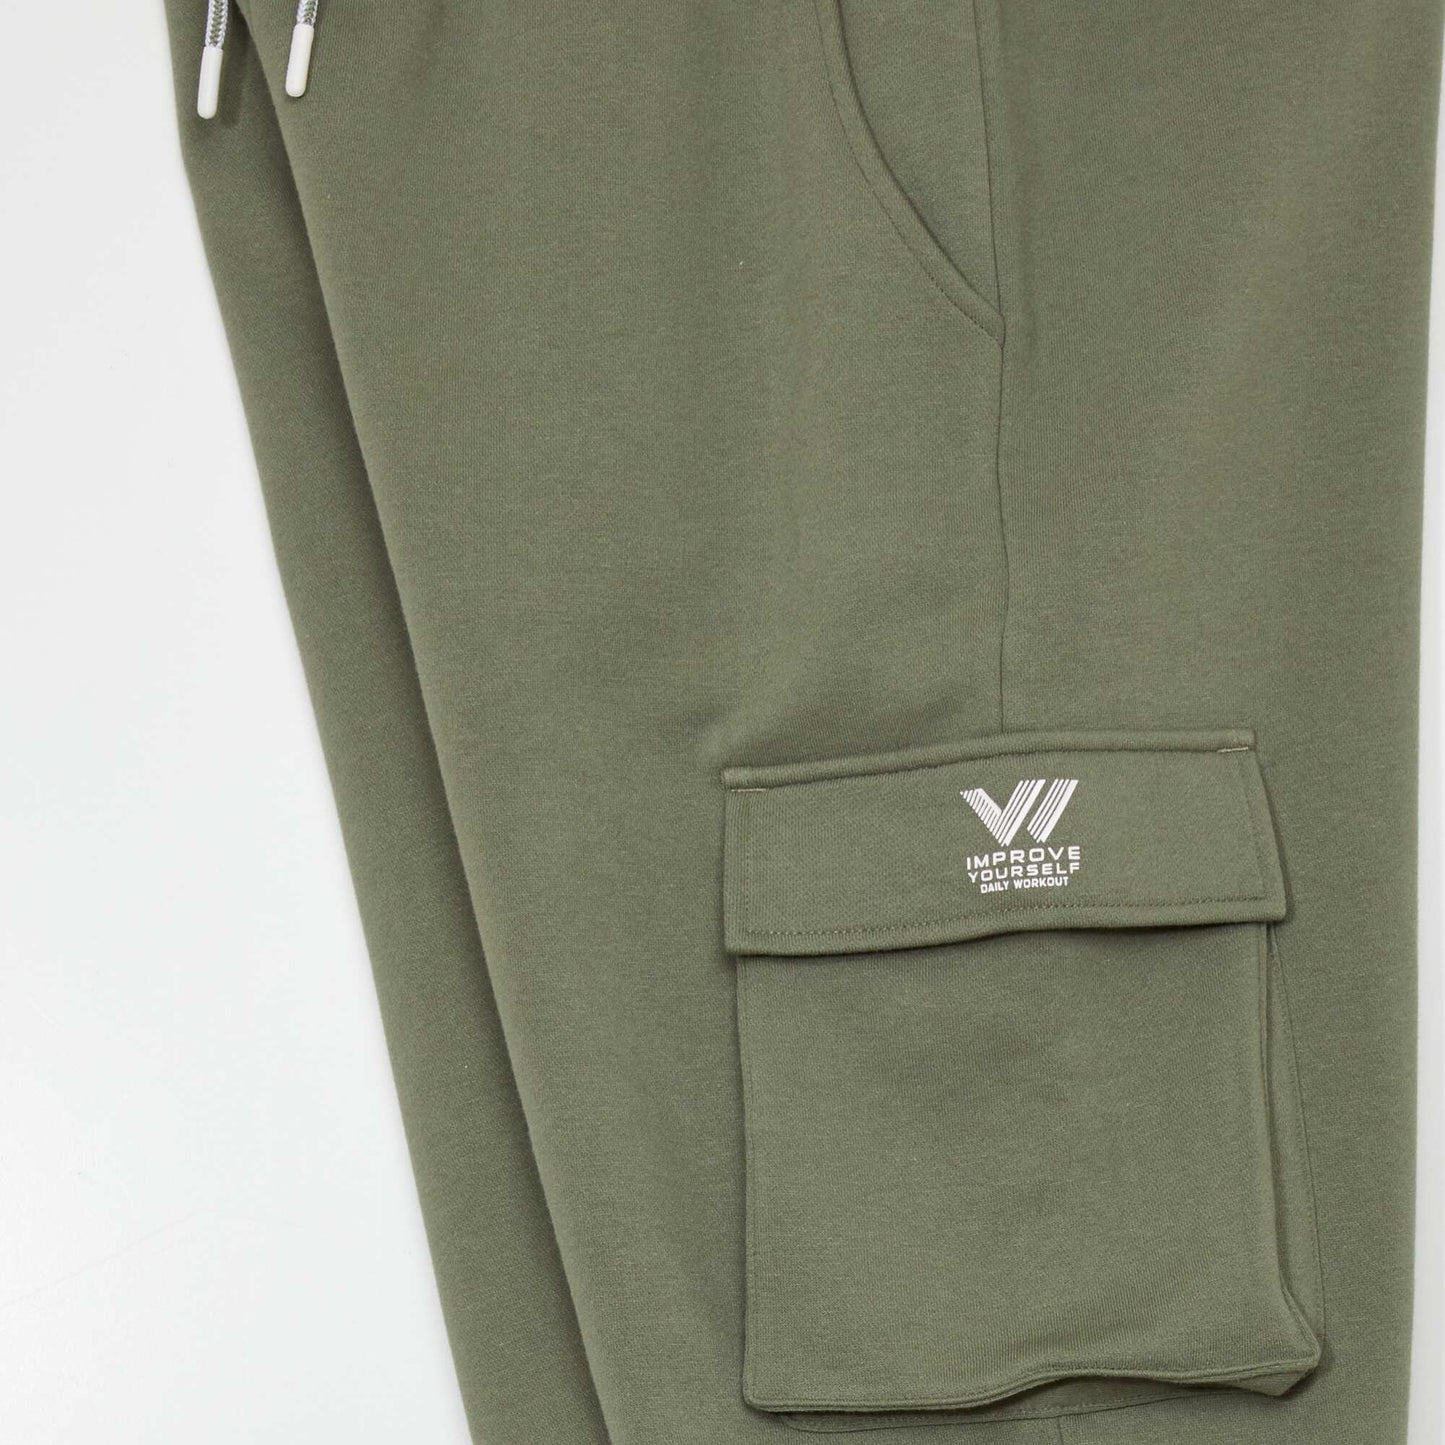 Pantalon de jogging avec poches Vert